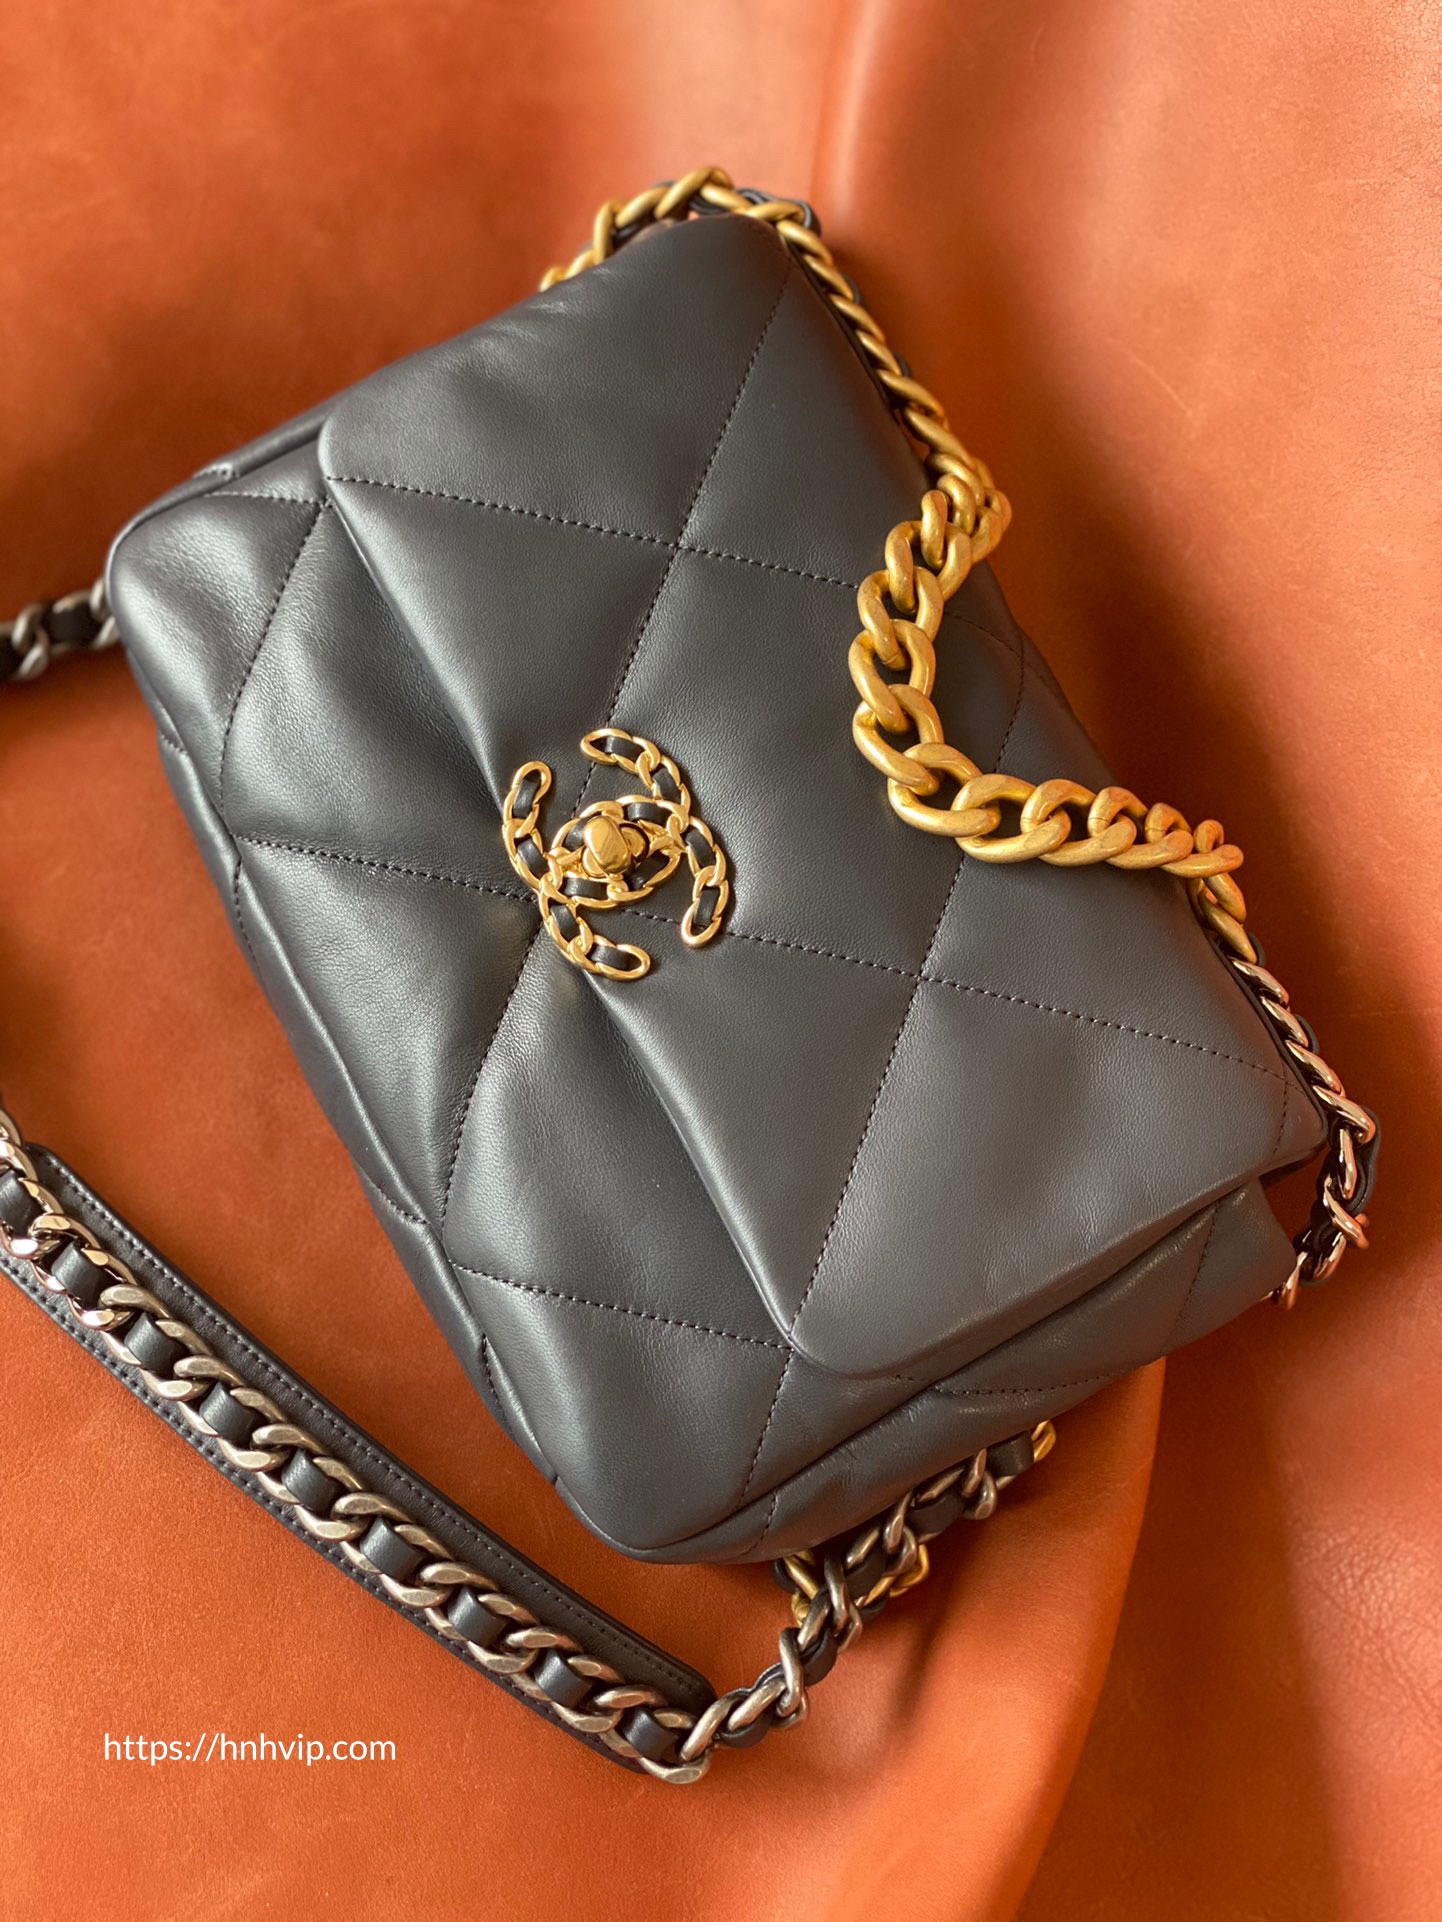 Chanel 19 Handbag  The 10 Best Chanel Bags to Date  POPSUGAR Fashion  Photo 11